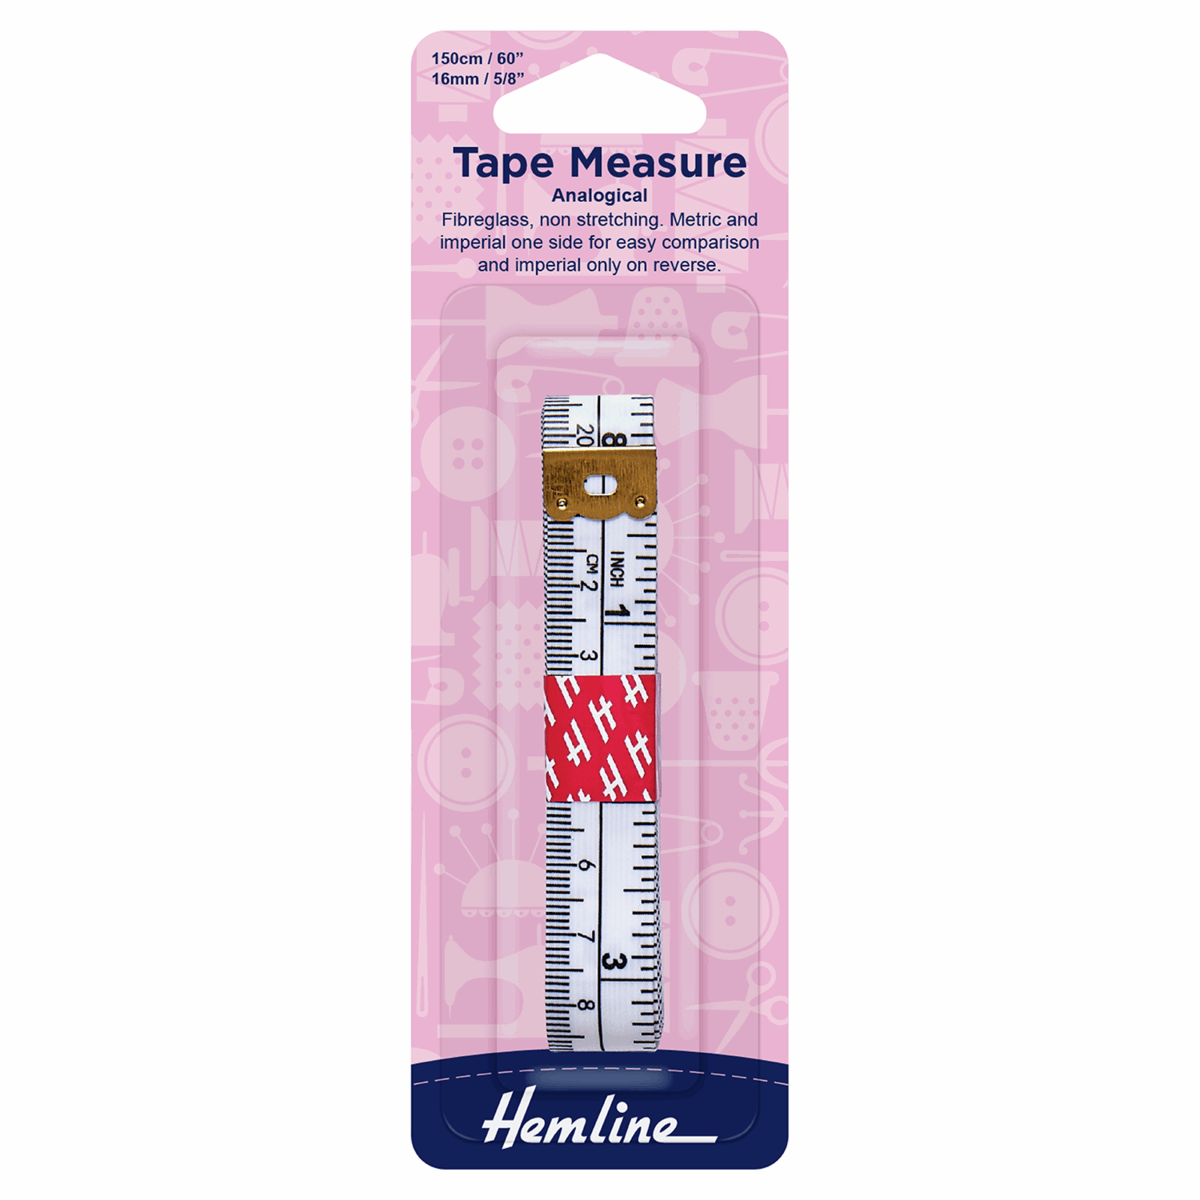 Hemline Analogical Tape Measure